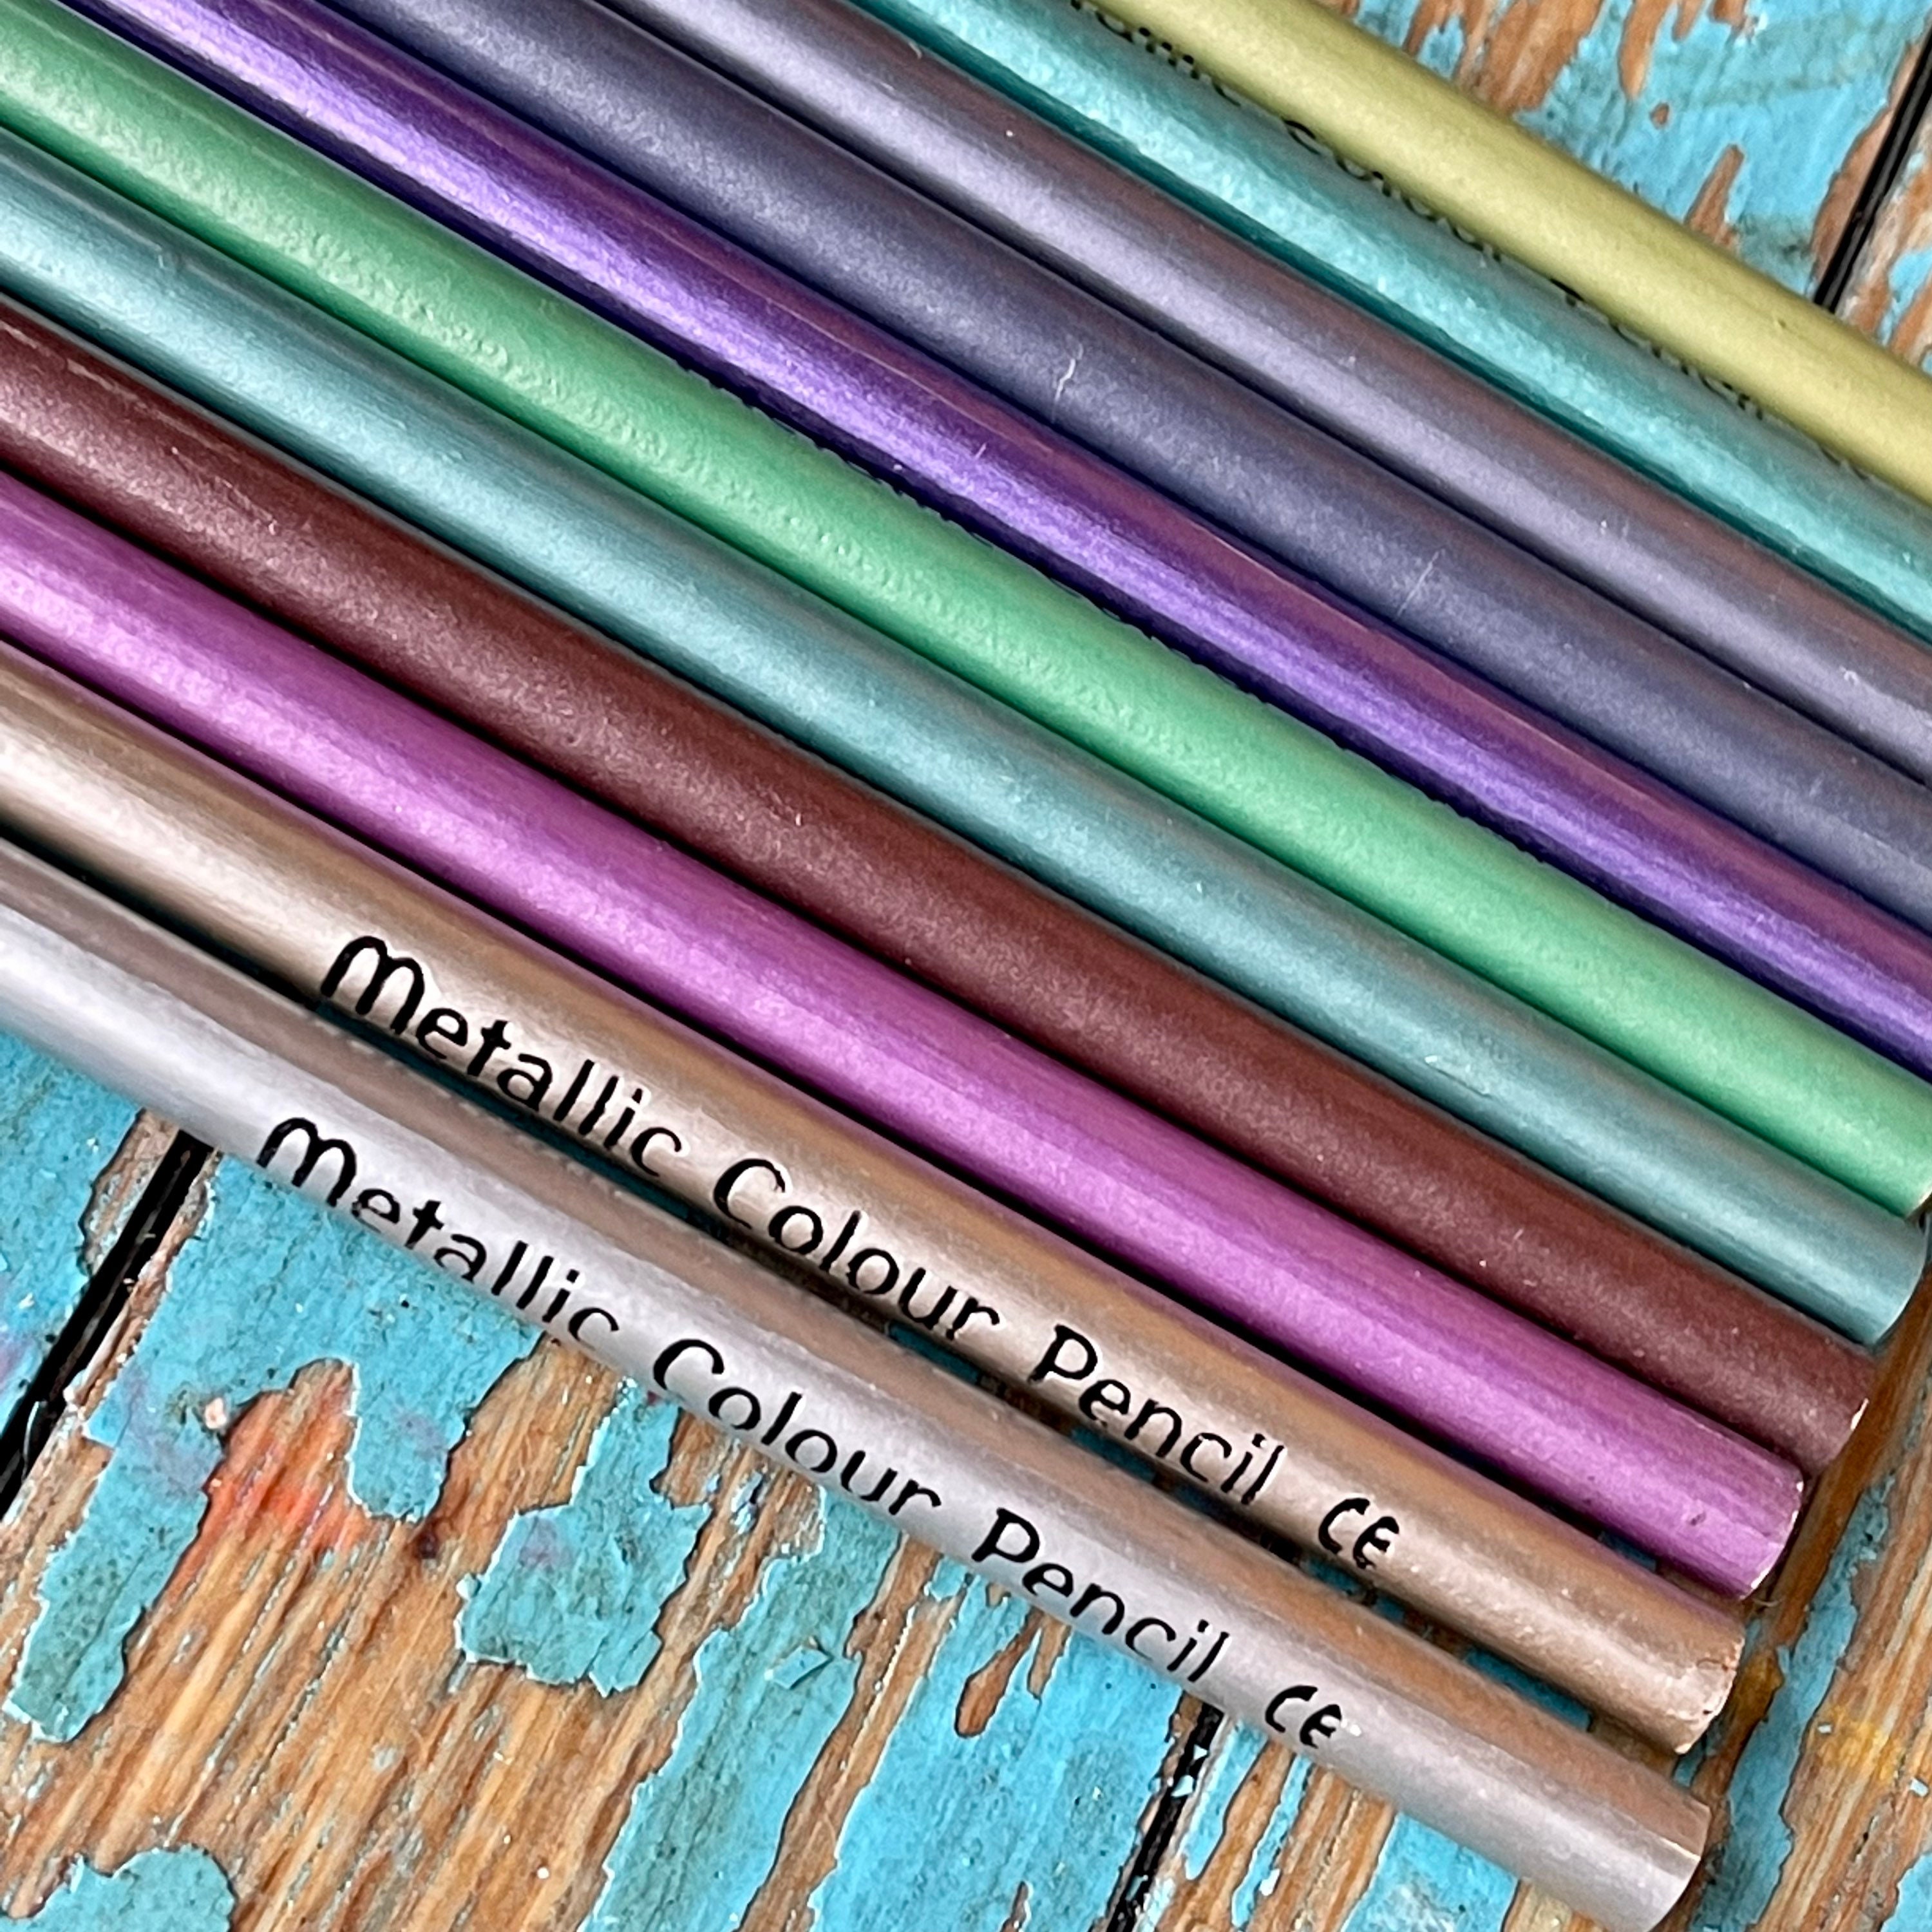 Prismacolor Premier Soft Core Colored Set of 72 Pencils Drawing, Blending,  Shading & Rendering, Prismacolor Arts Crafts, Anime, Manga 